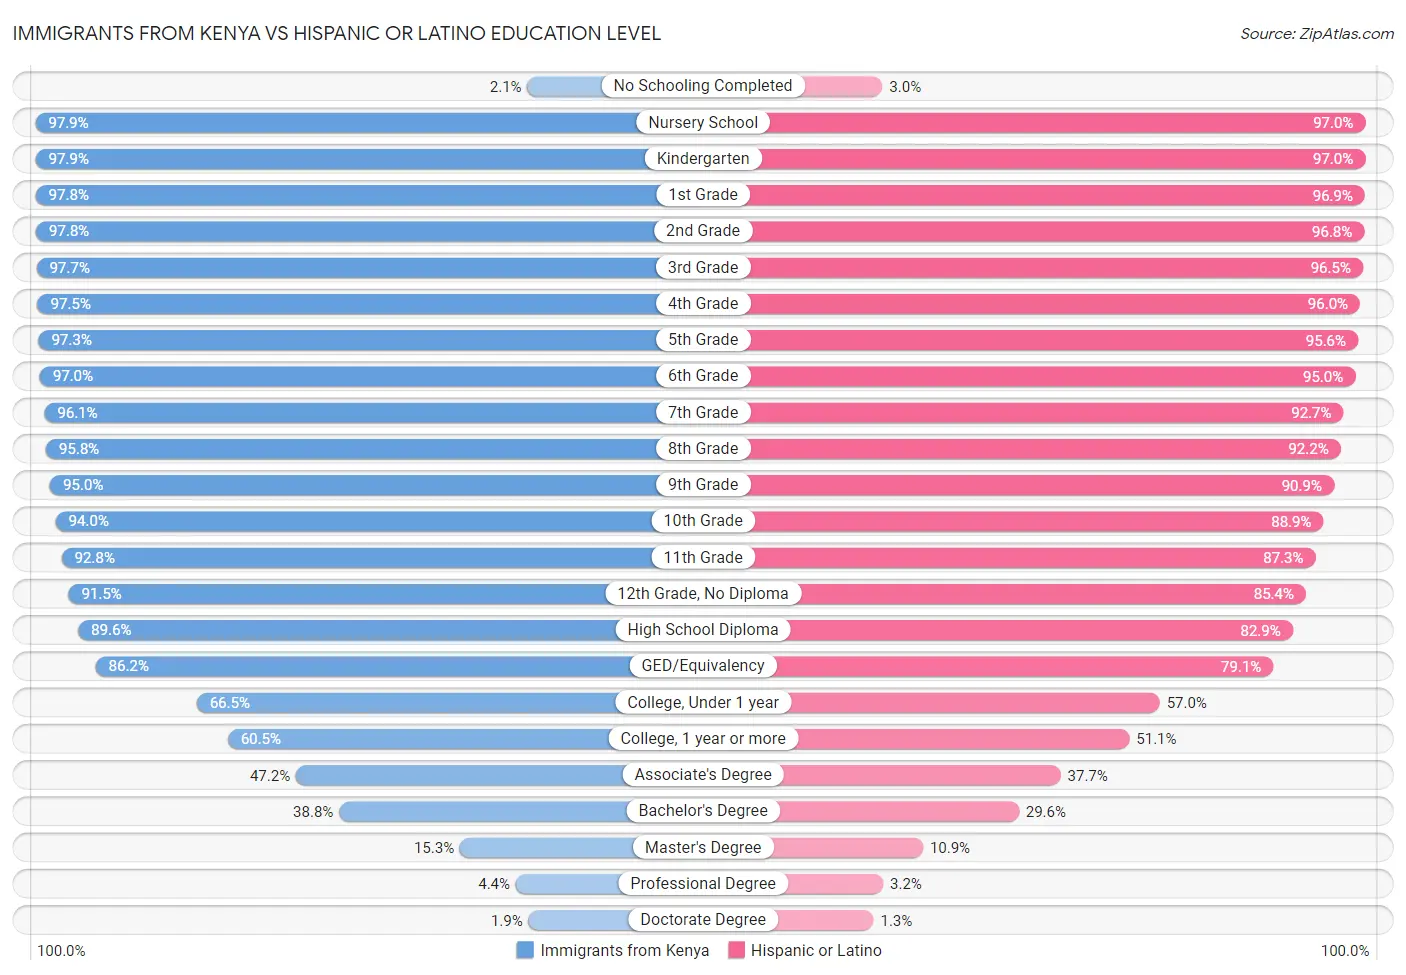 Immigrants from Kenya vs Hispanic or Latino Education Level